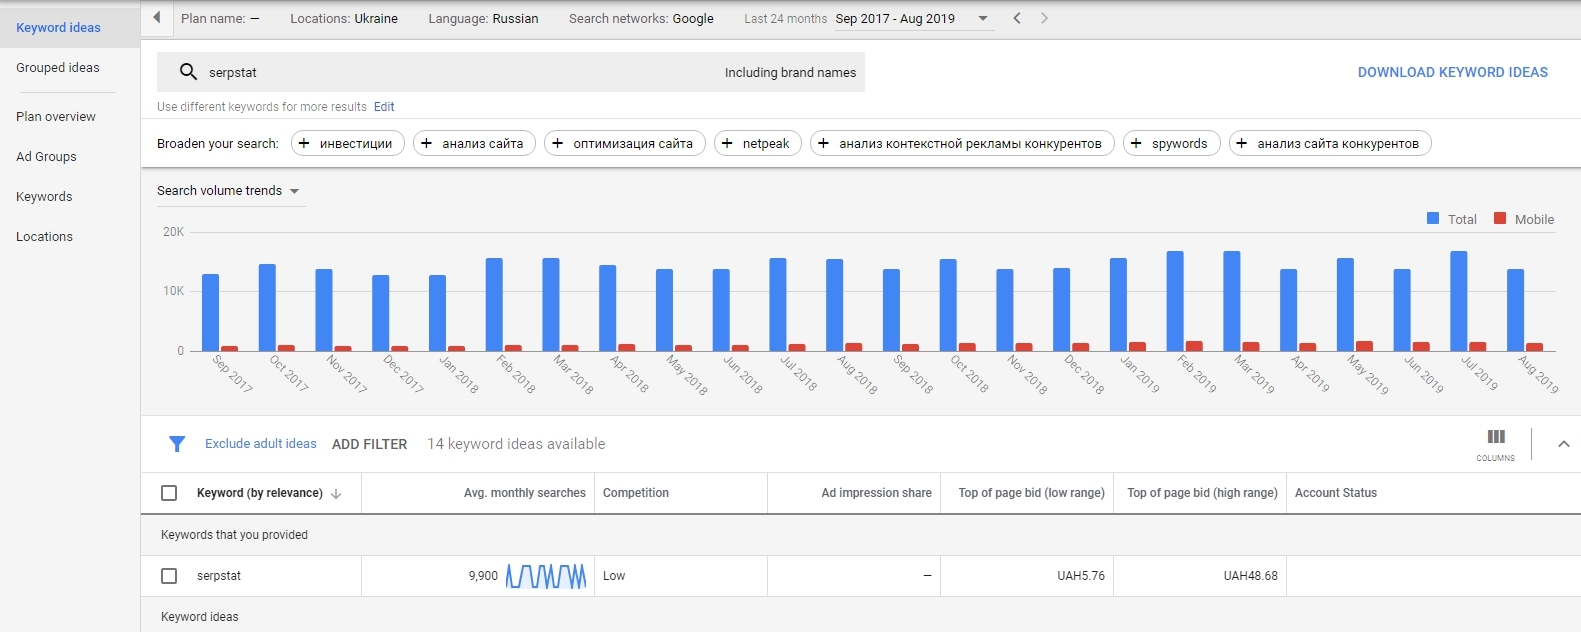 Brand awareness rating in Google Ads Keyword Planner